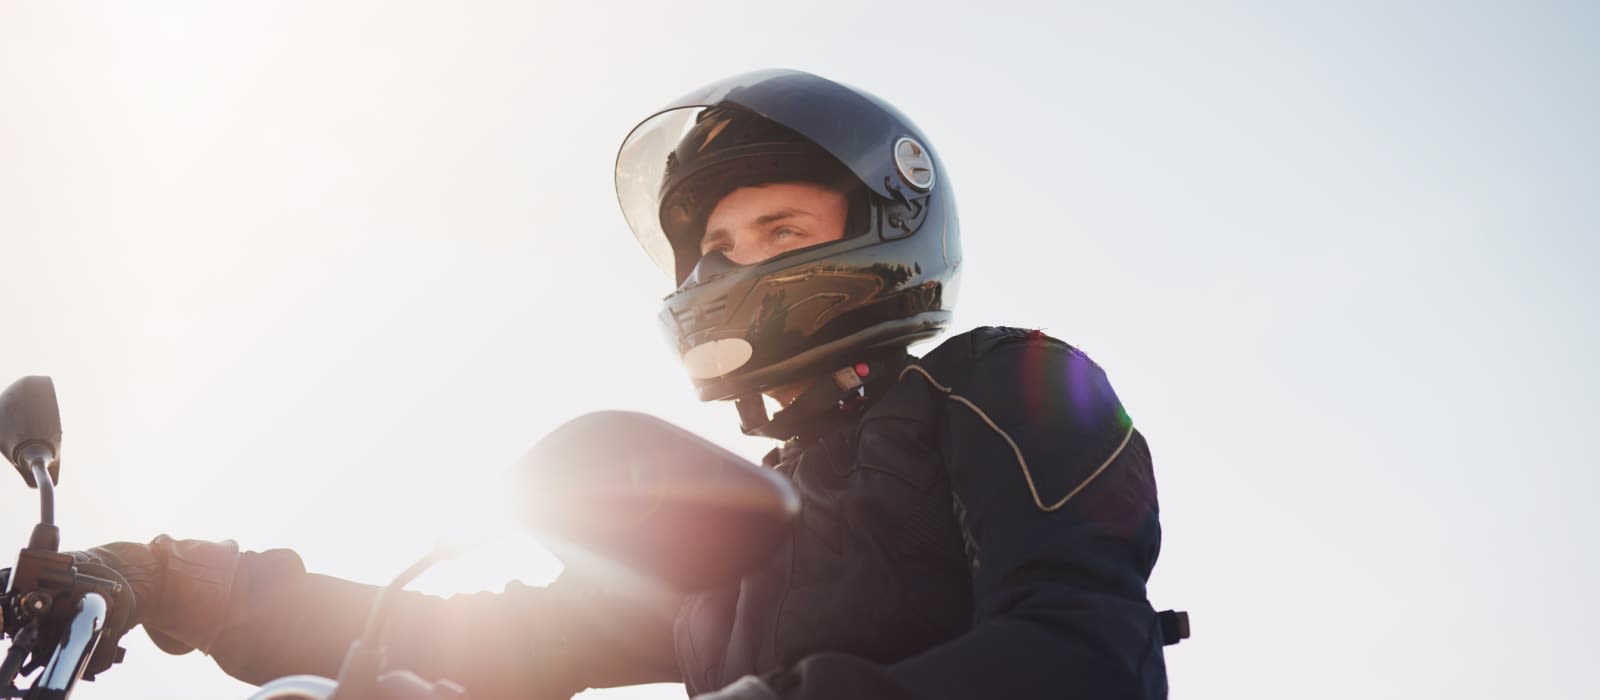 StreetRider, Best Motorcycle Insurance Rates, Ontario